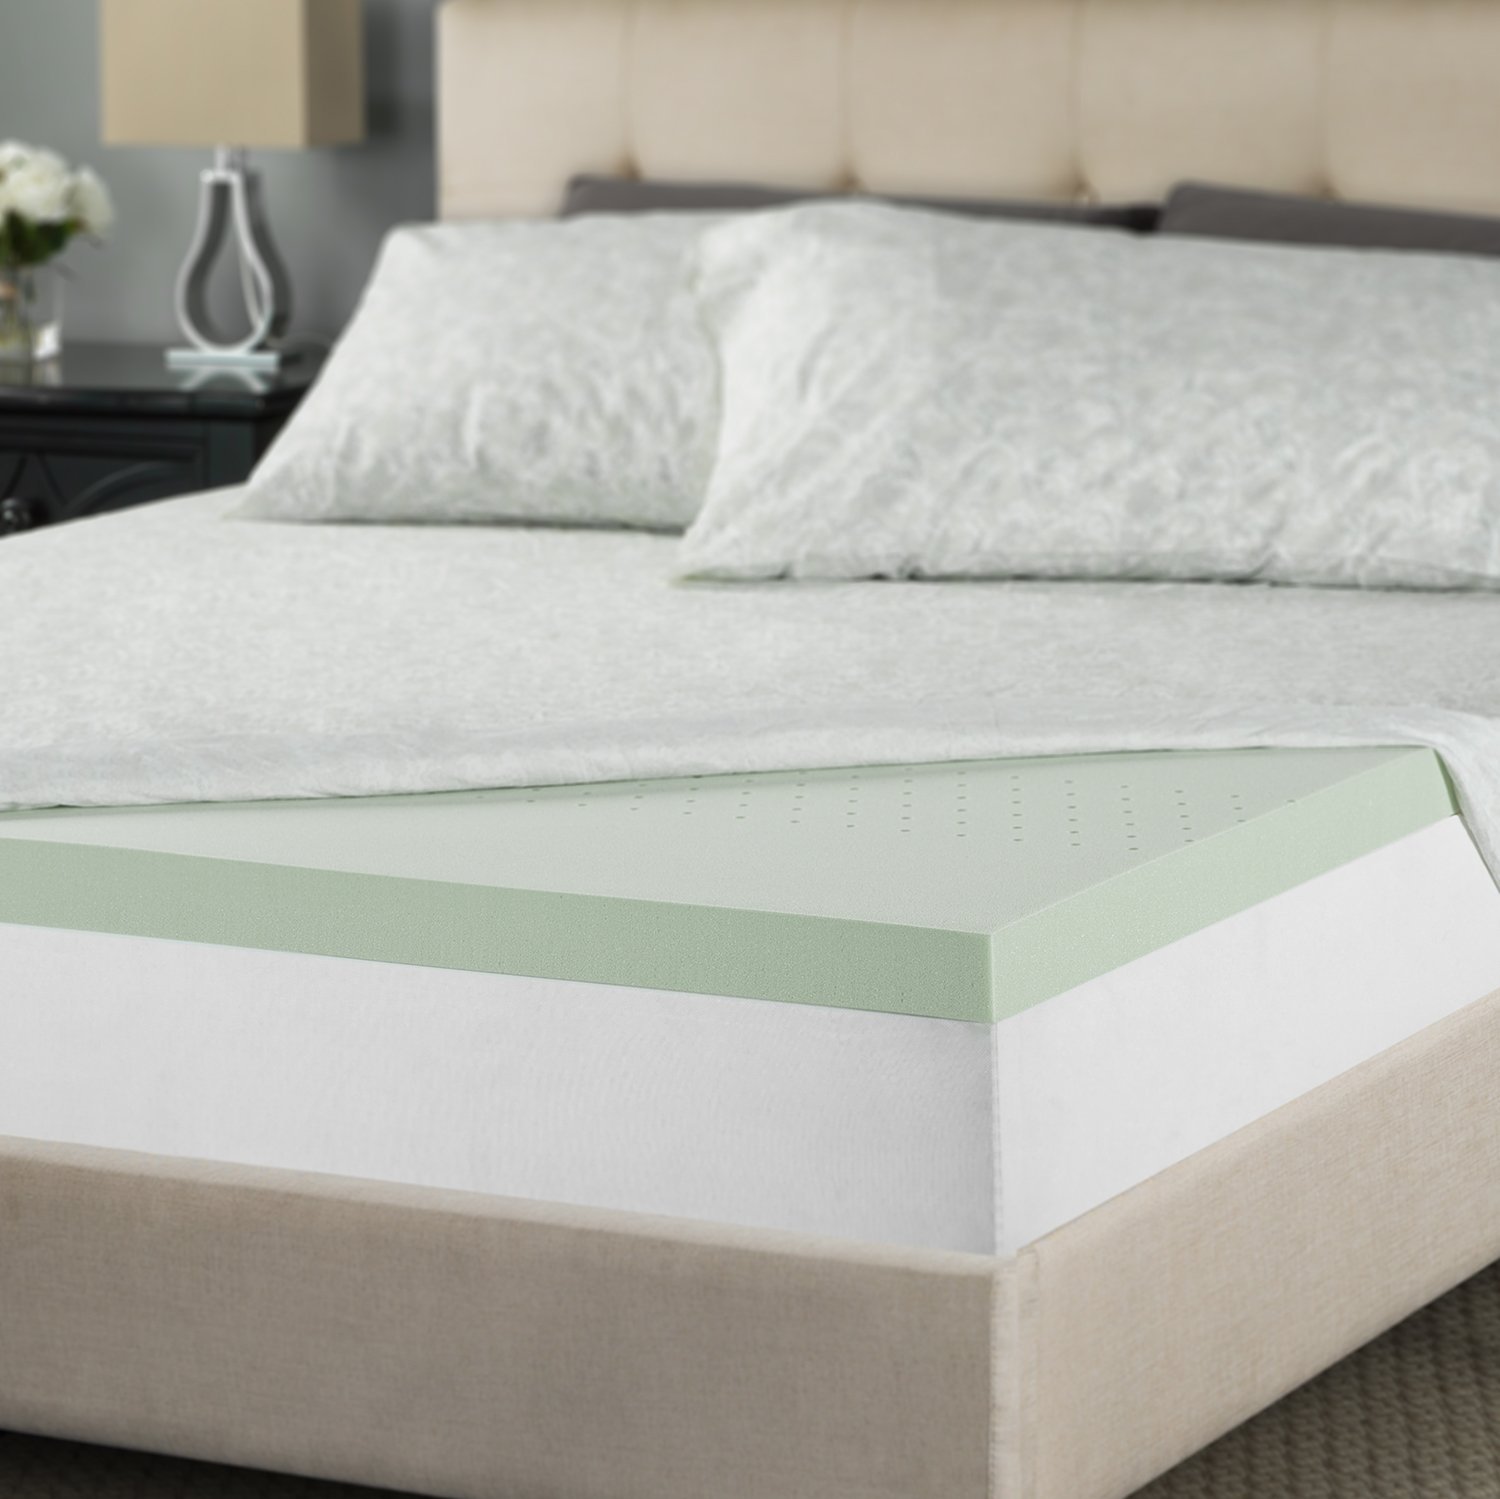 Good quality memory foam mattress